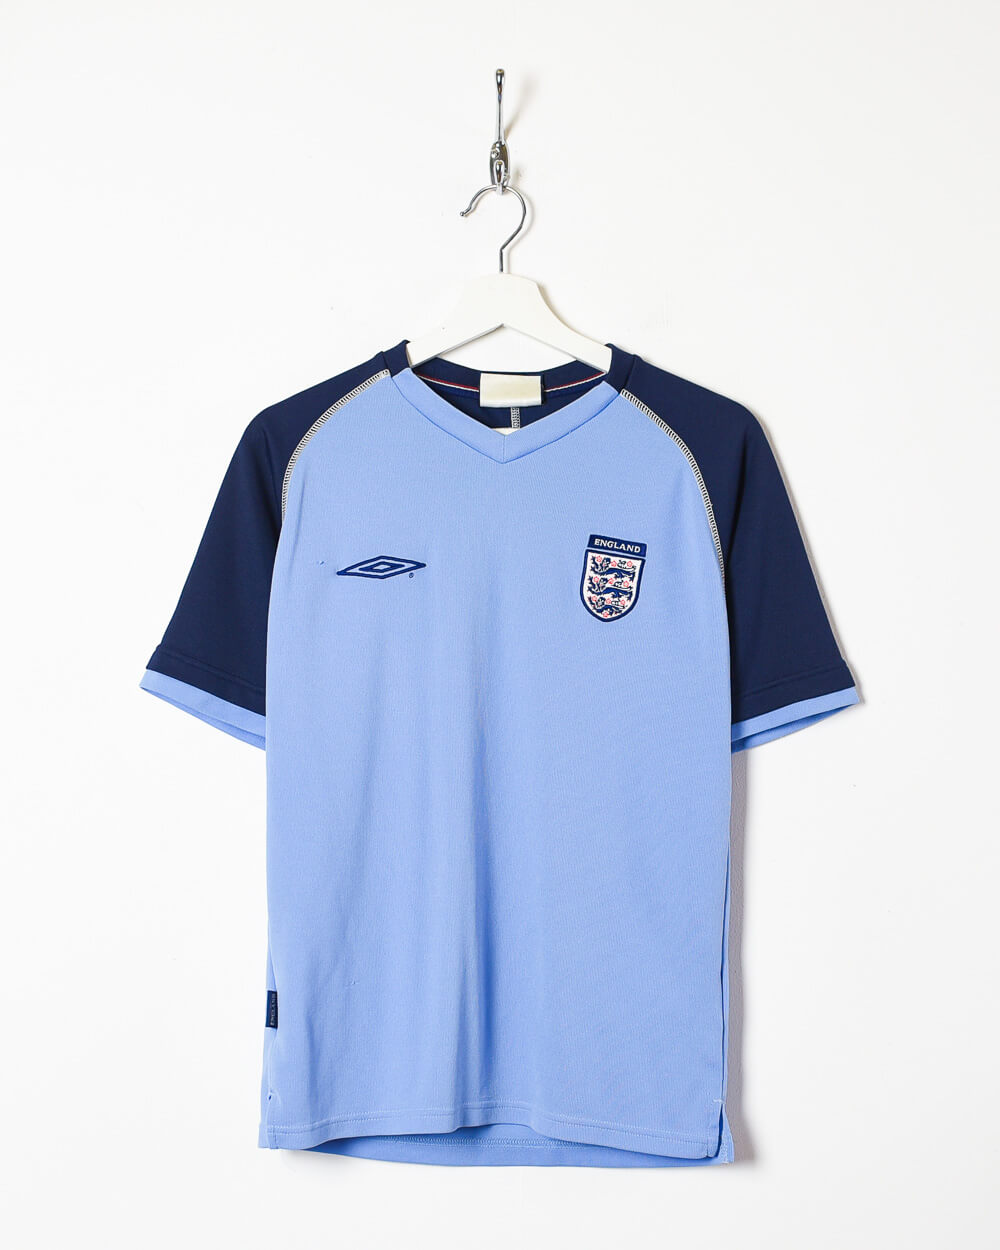 Umbro 00s England Training Shirt - Small